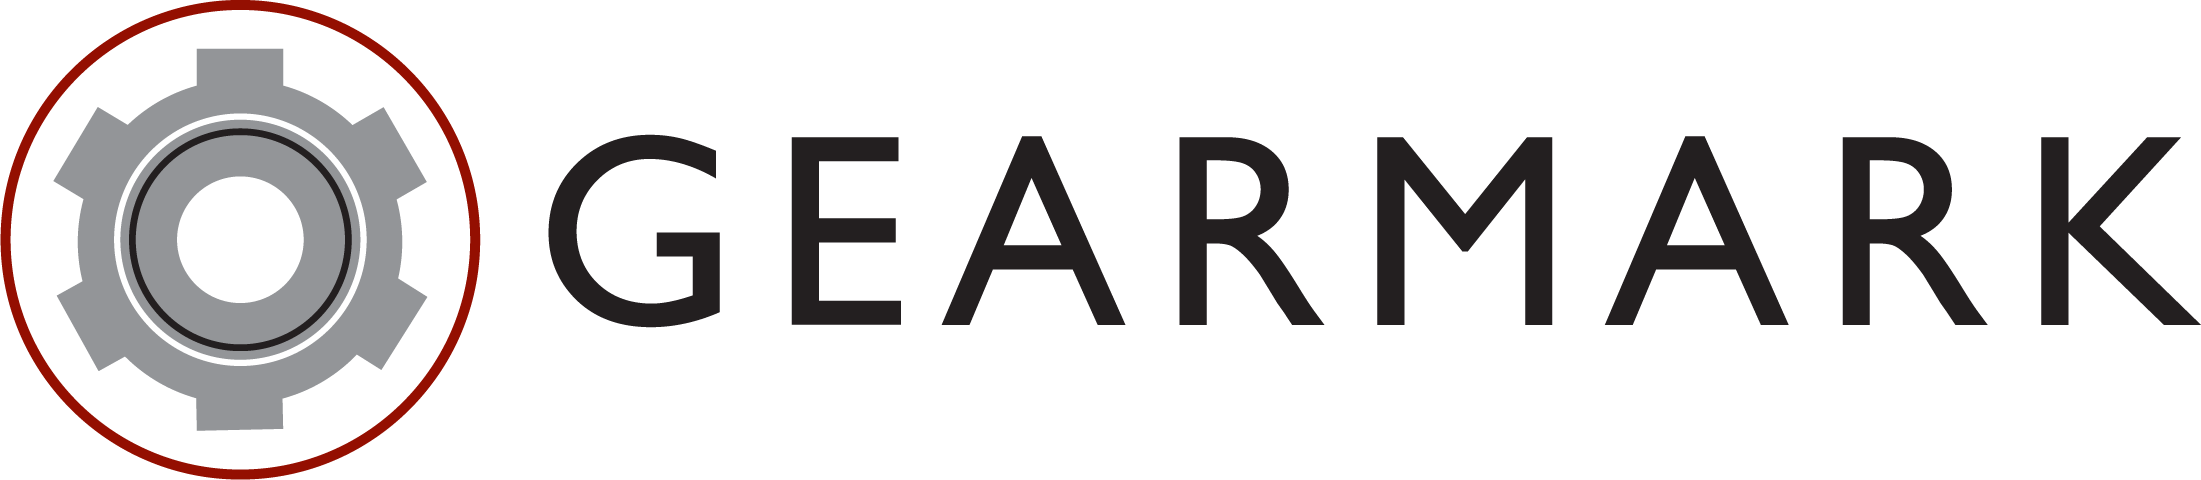 Gearmark logo